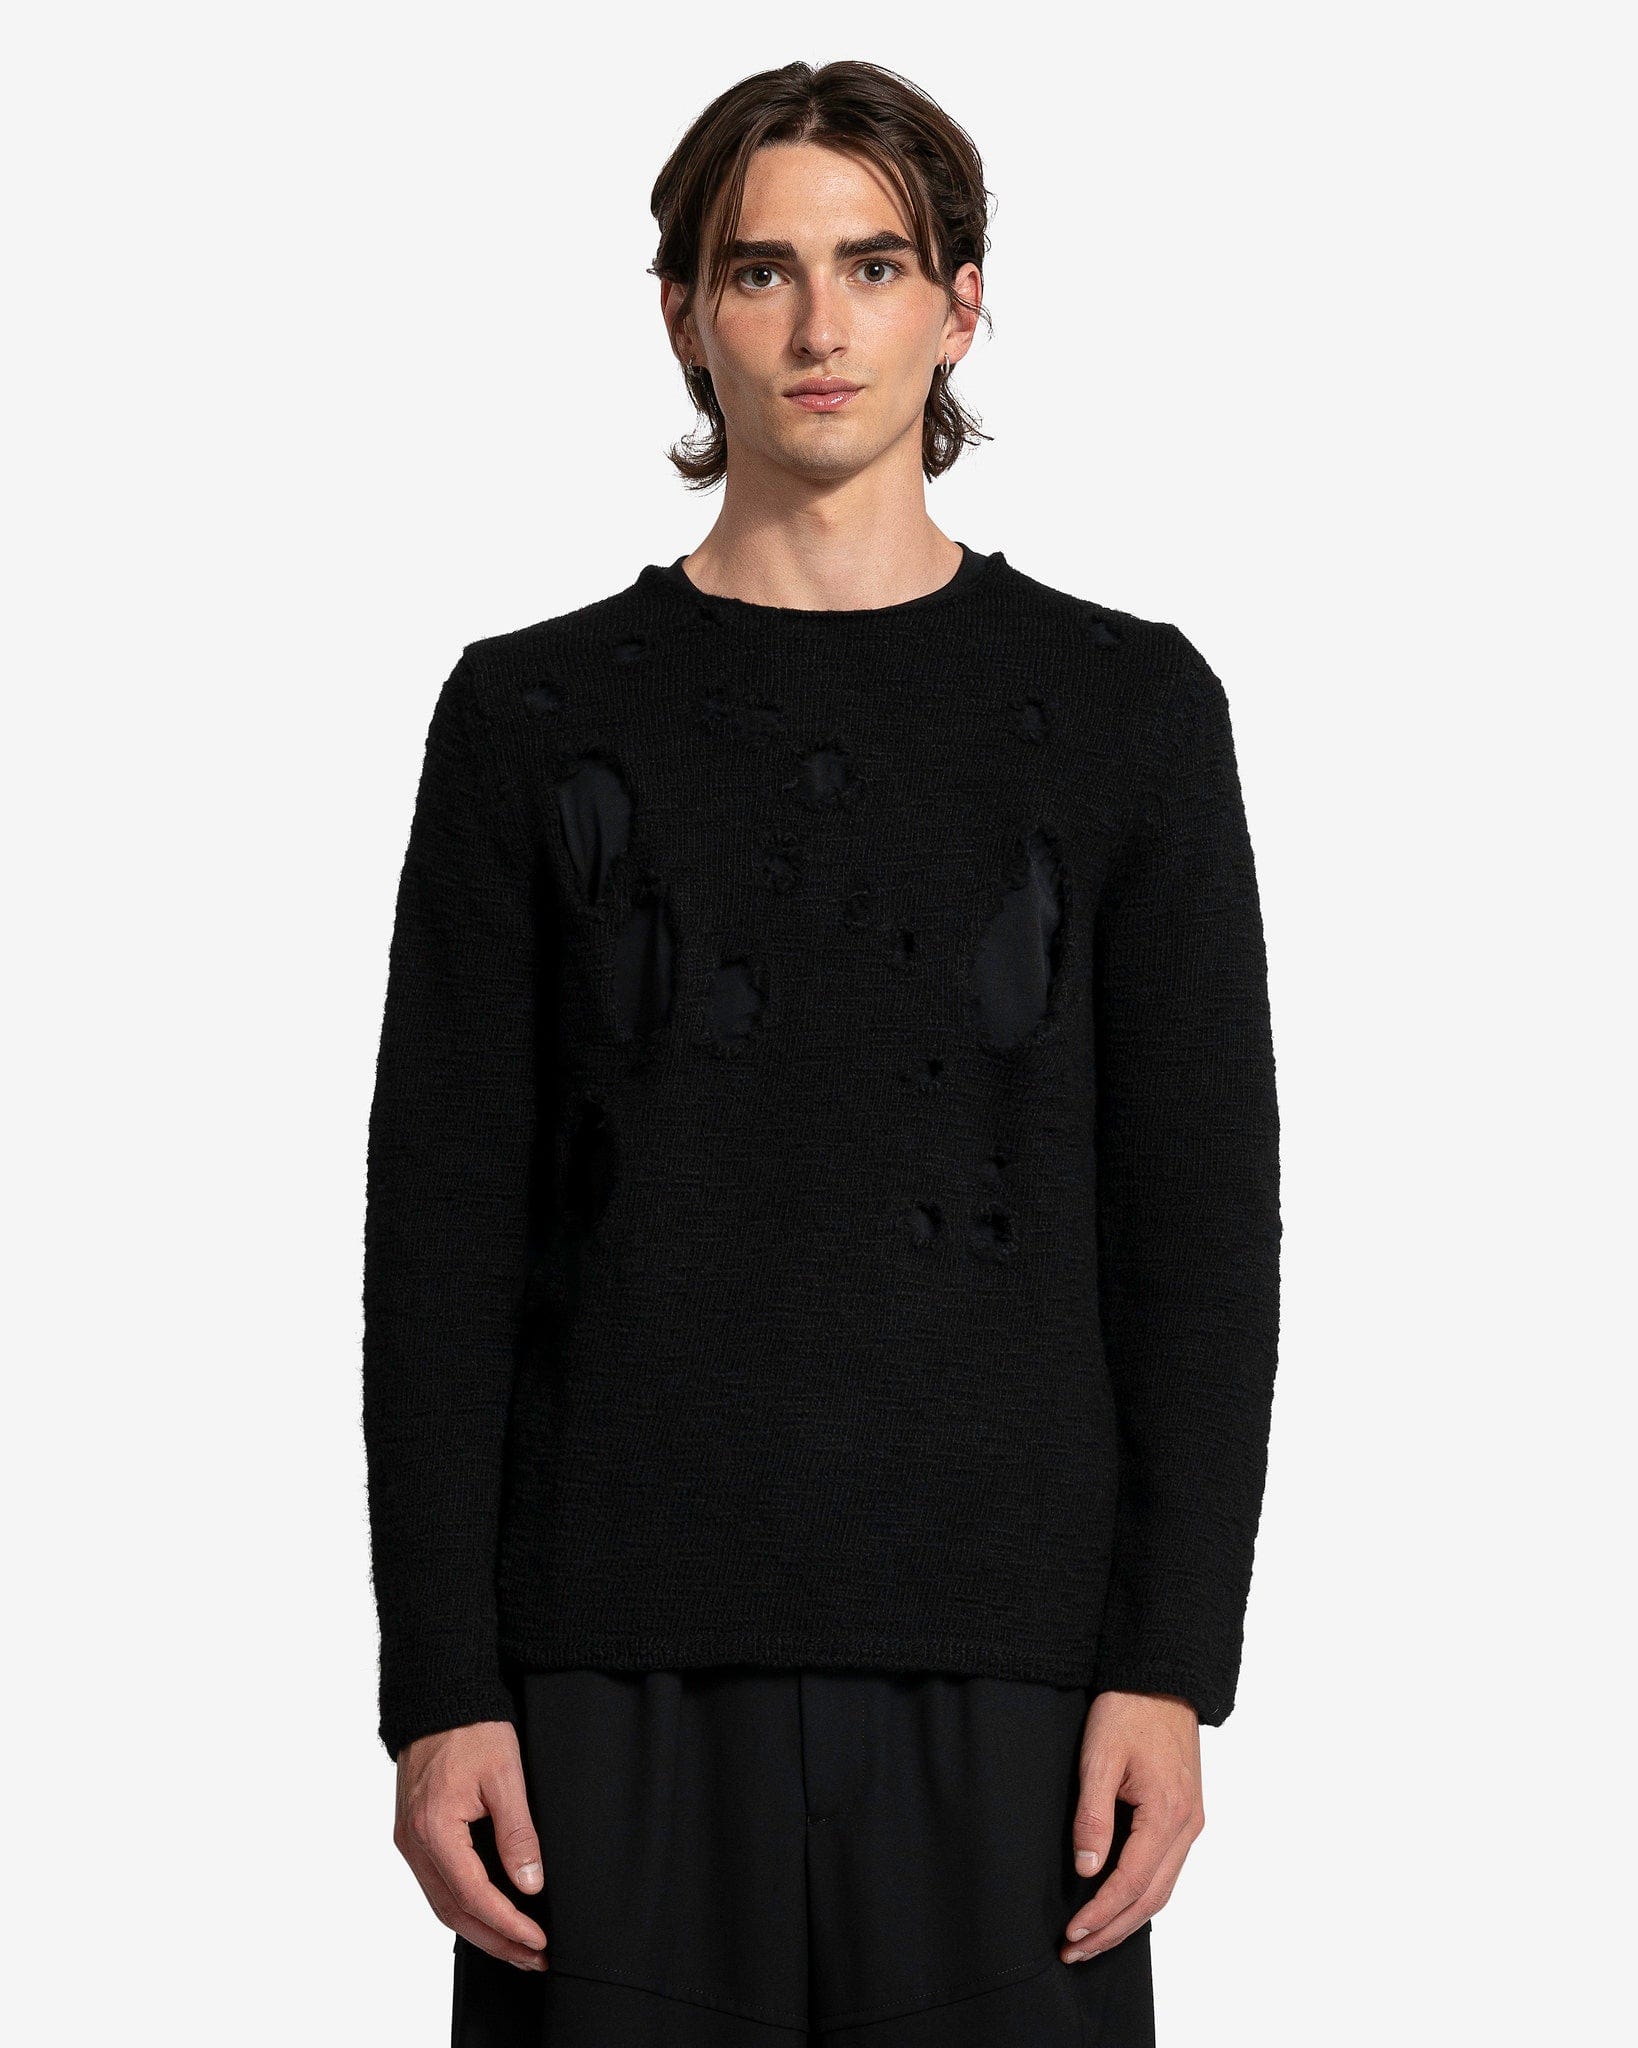 Distressed Crewneck Sweater in Black